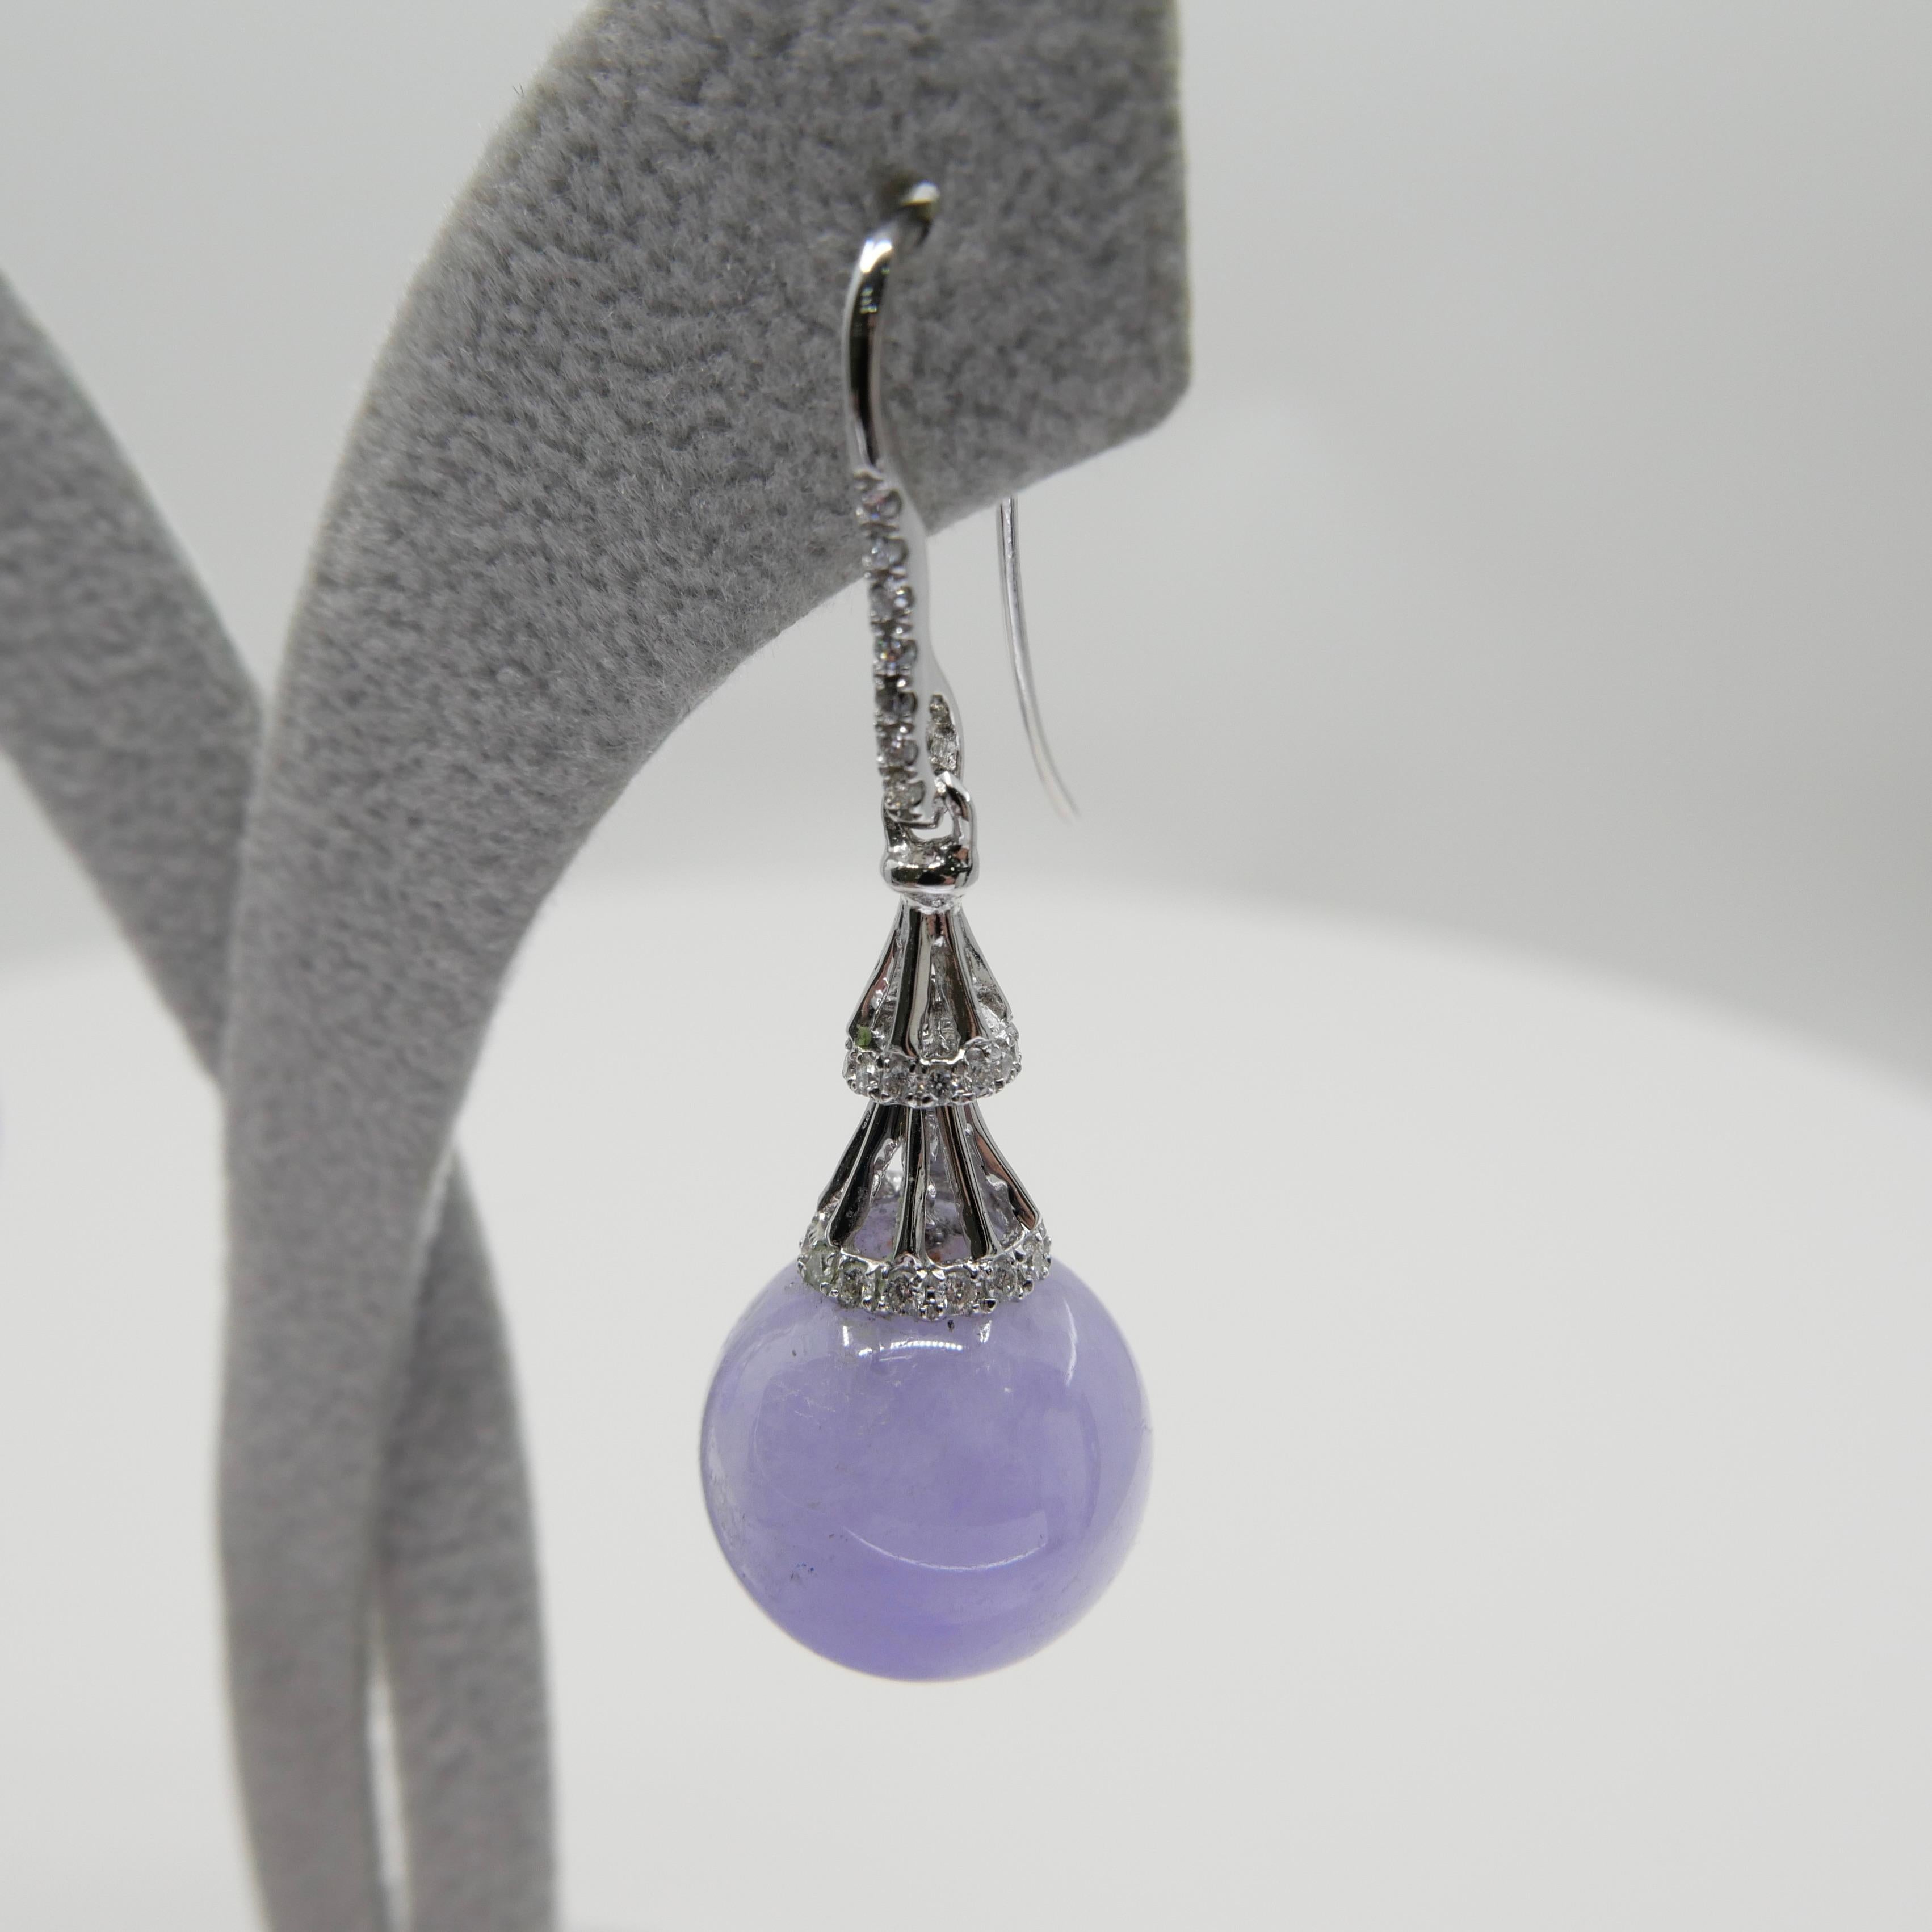 Certified Natural Lavender Jade Beads & Diamond Drop Earrings. Exquisite. 1